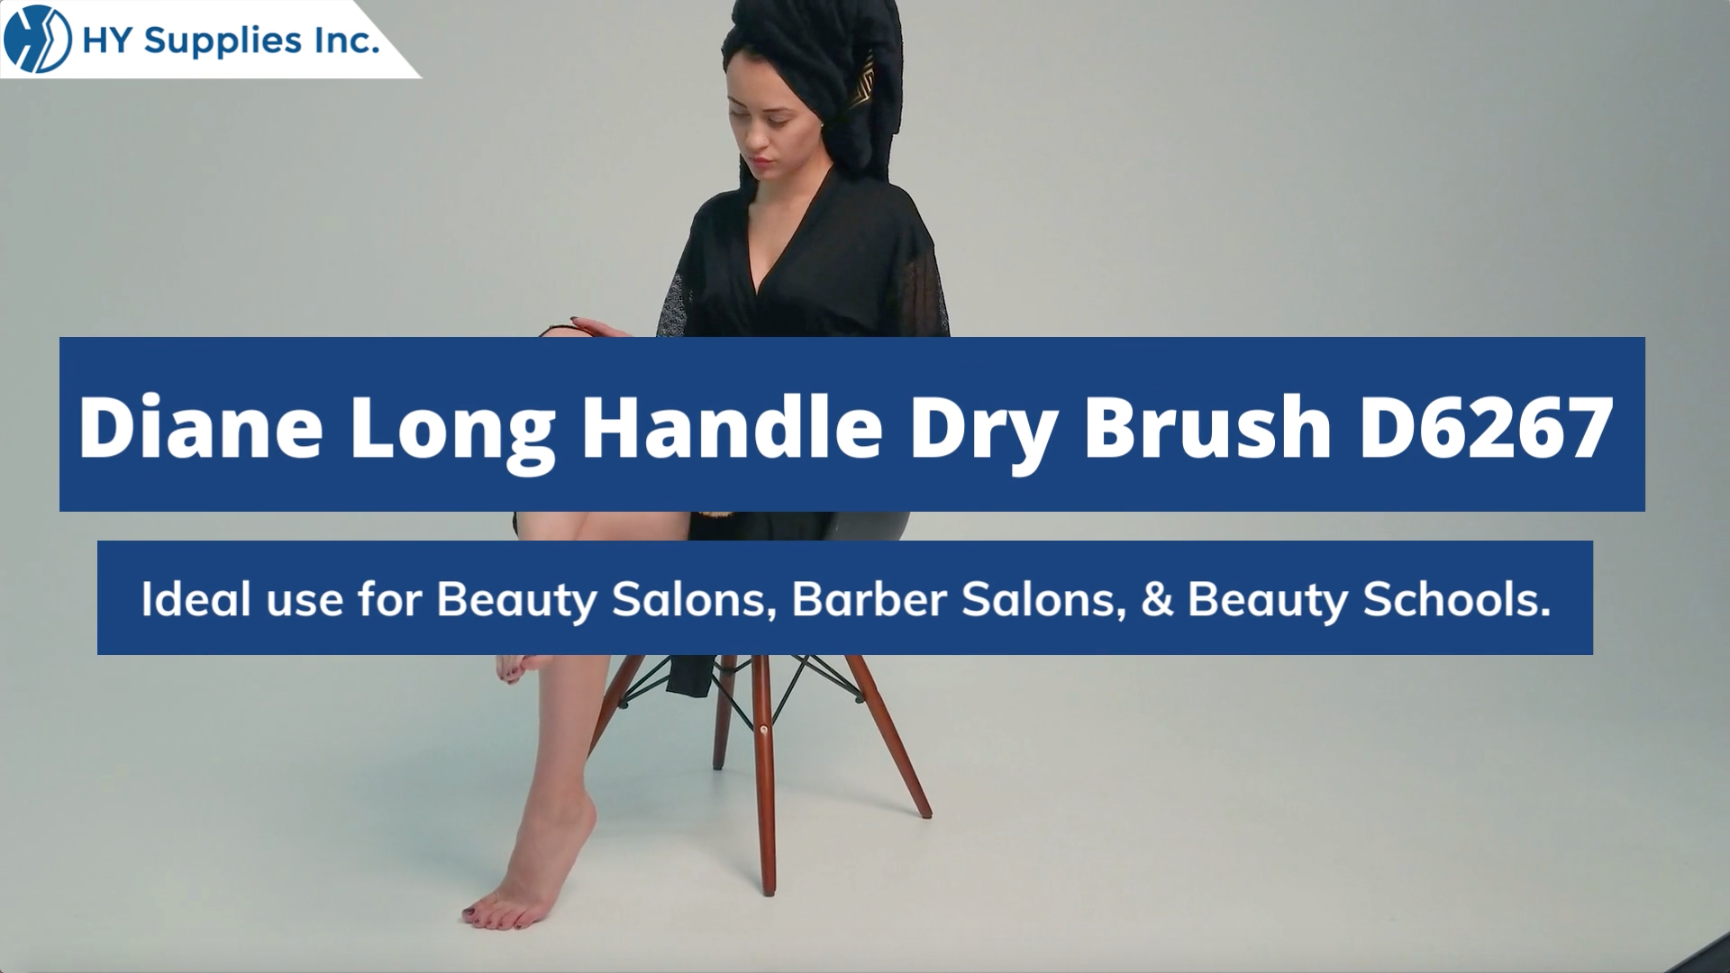 Diane Long Handle Dry Brush D6267 